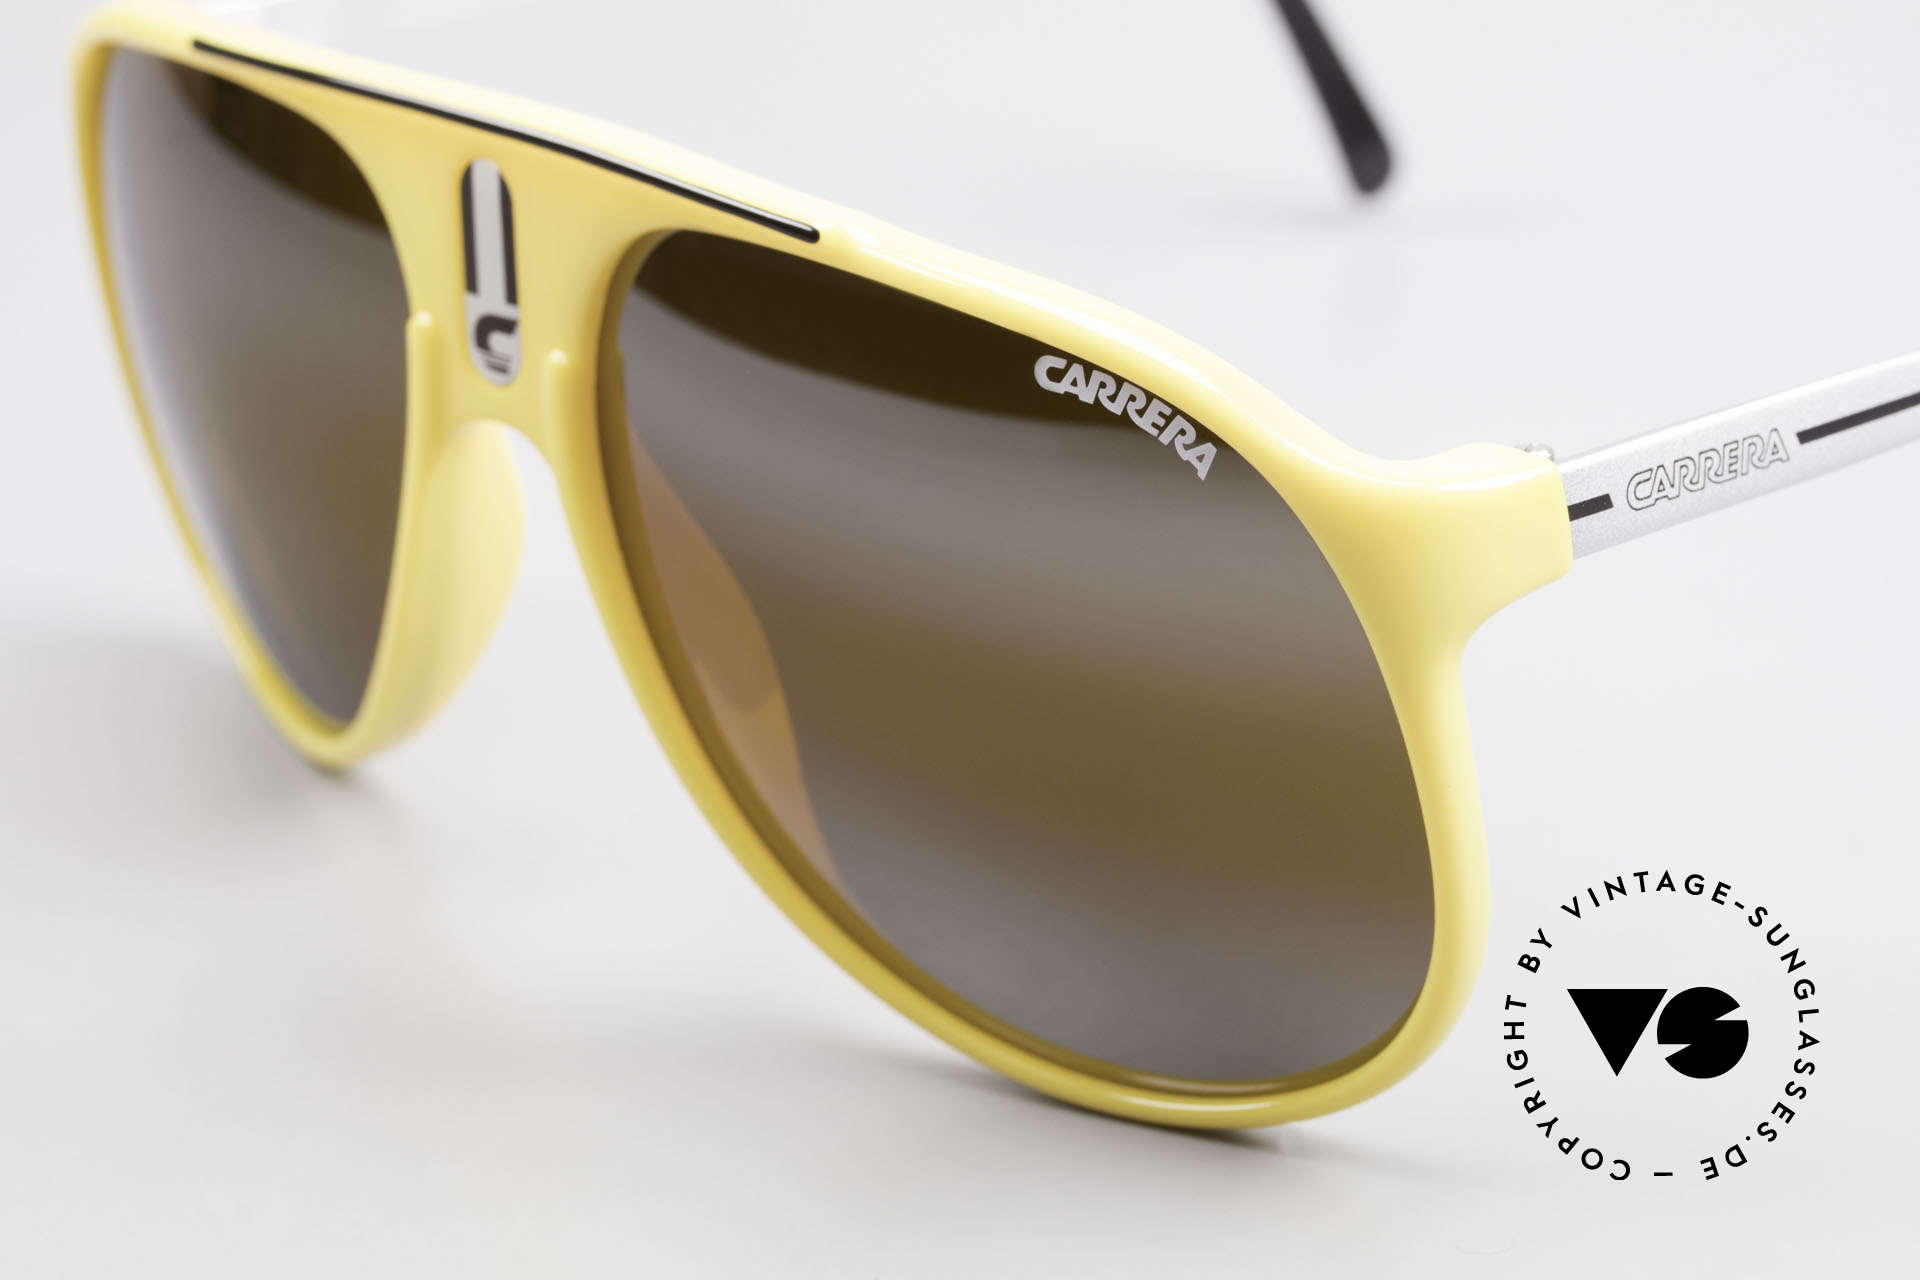 Carrera 5424 Rare Mirrored 80's Sunglasses, brown-mirrored sun lenses for 100% UV protection, Made for Men